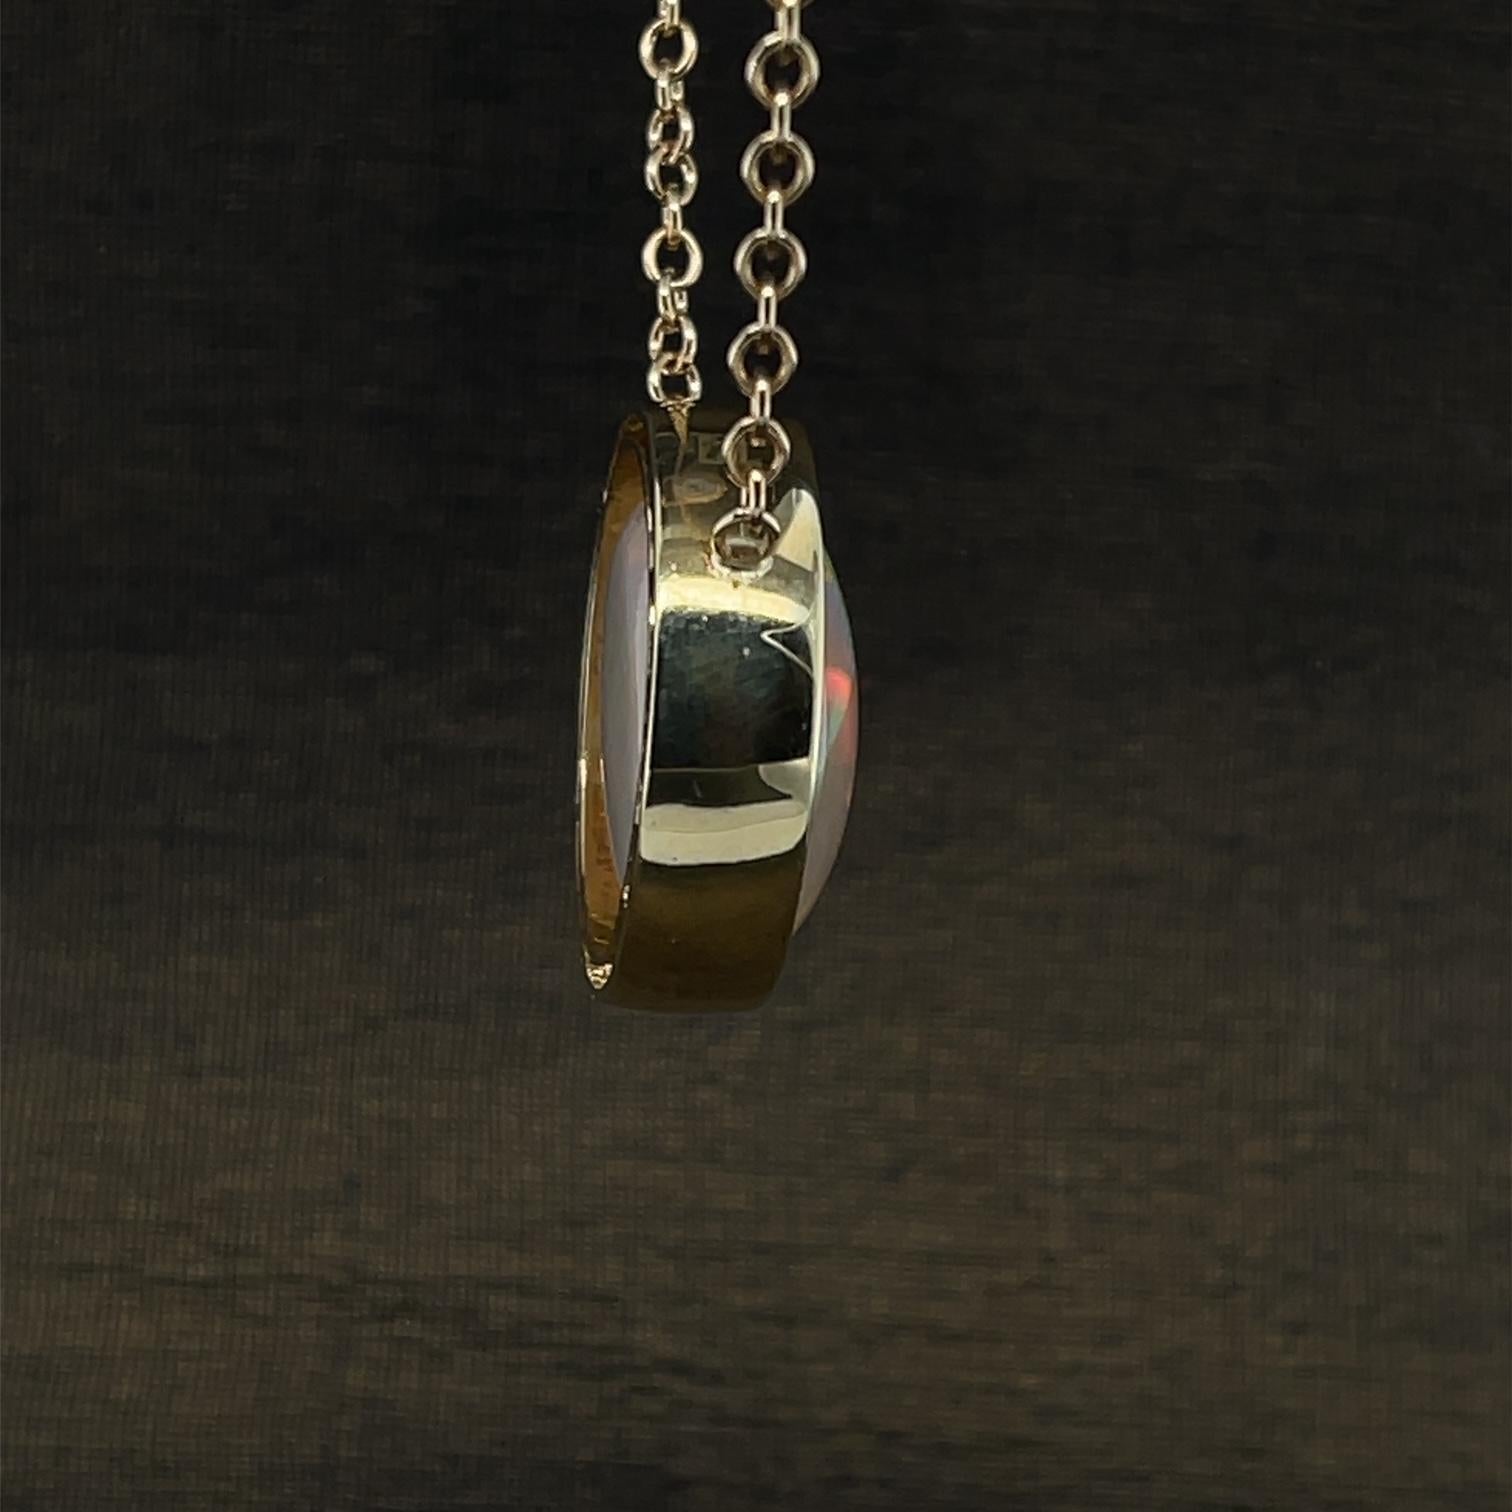 Artisan 14.21 ct. Bezel Set Round Ethiopian Opal, 18k Yellow Gold Pendant Drop Necklace